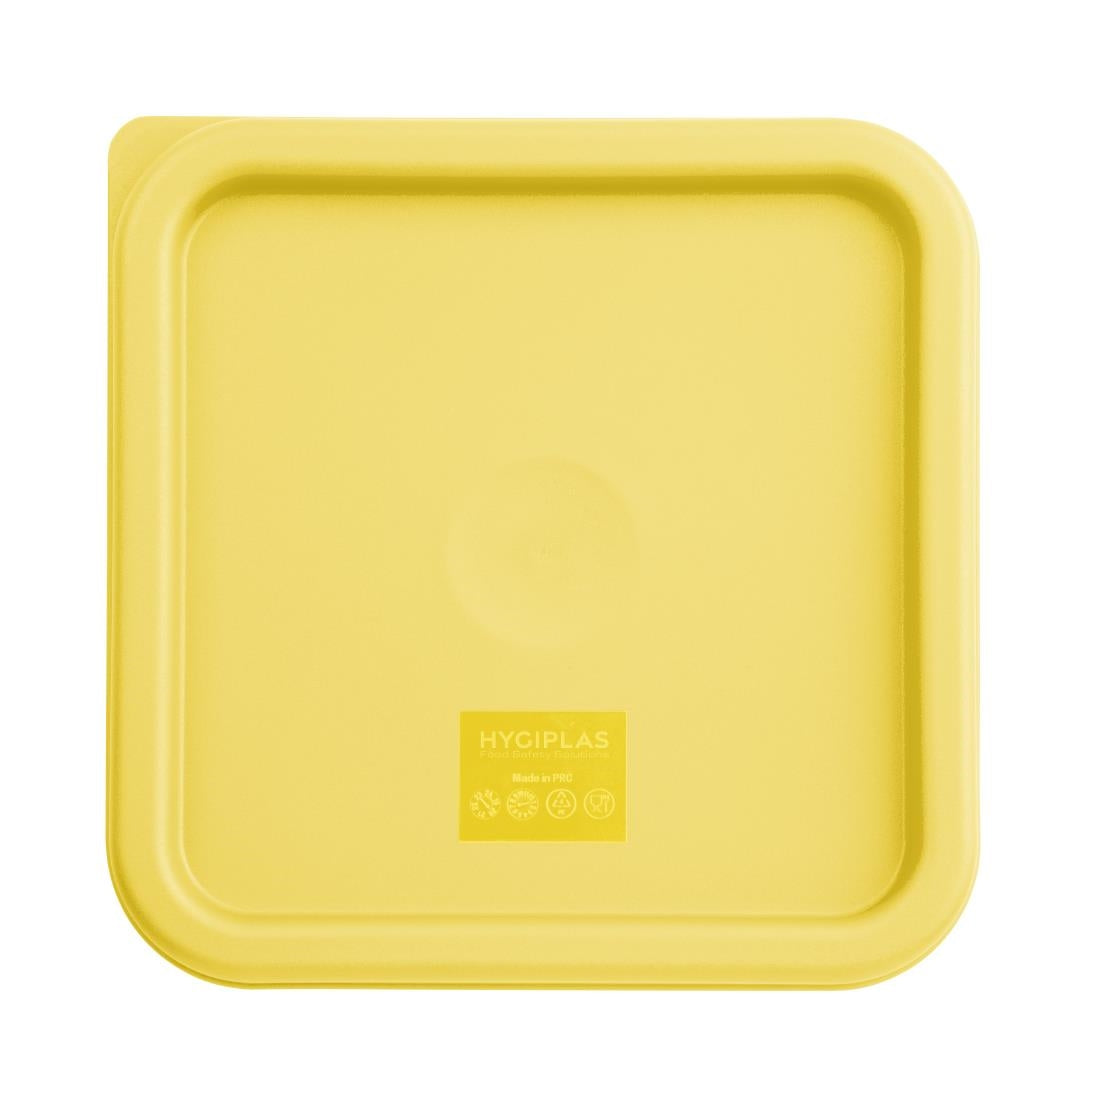 FX138 Hygiplas Square Food Storage Container Lid Yellow Medium